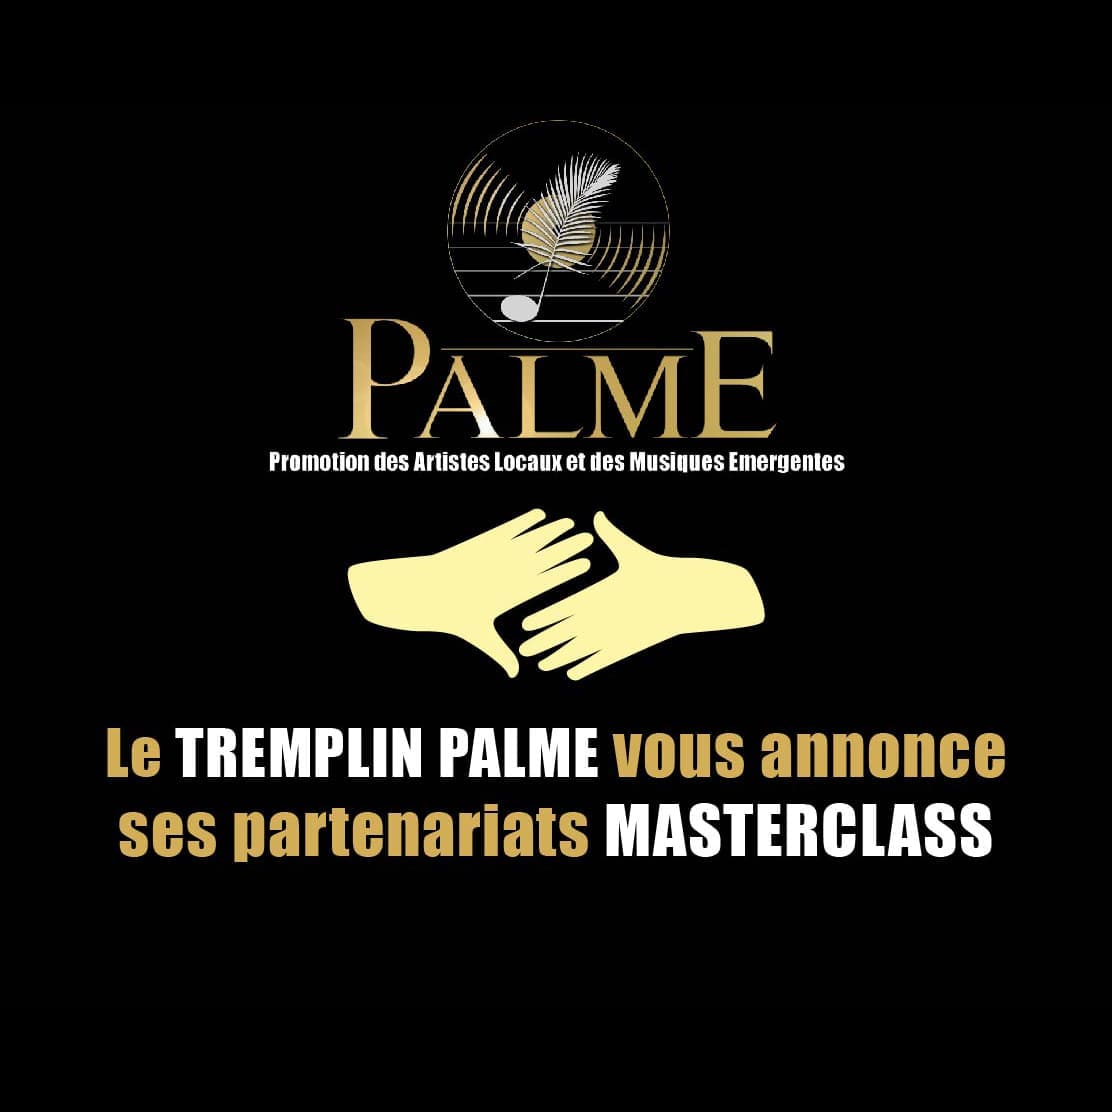 Partenariat PALME : Masterclass